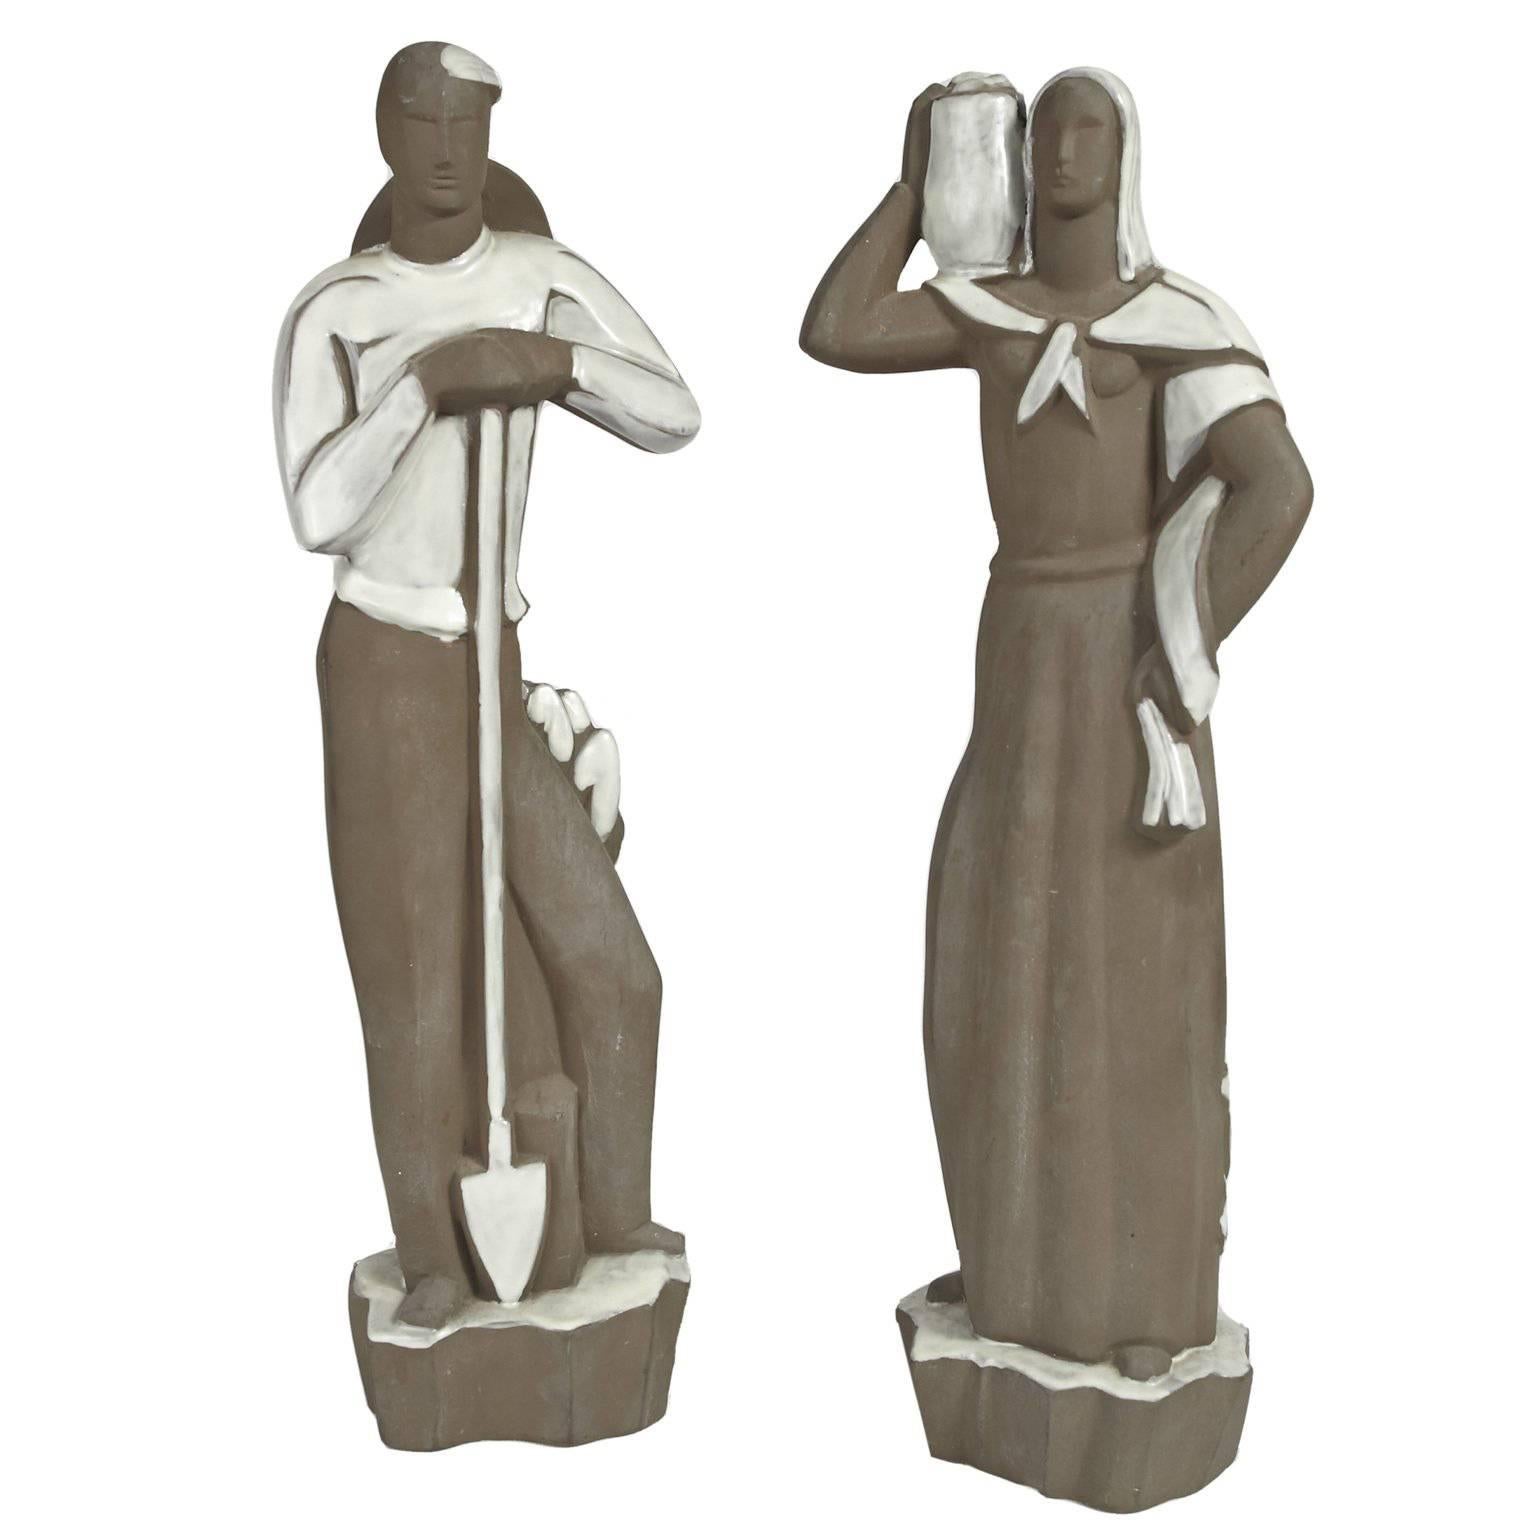 Striking Pair of Ceramic WPA Era/Art Deco Figurines Depicting Workers For Sale